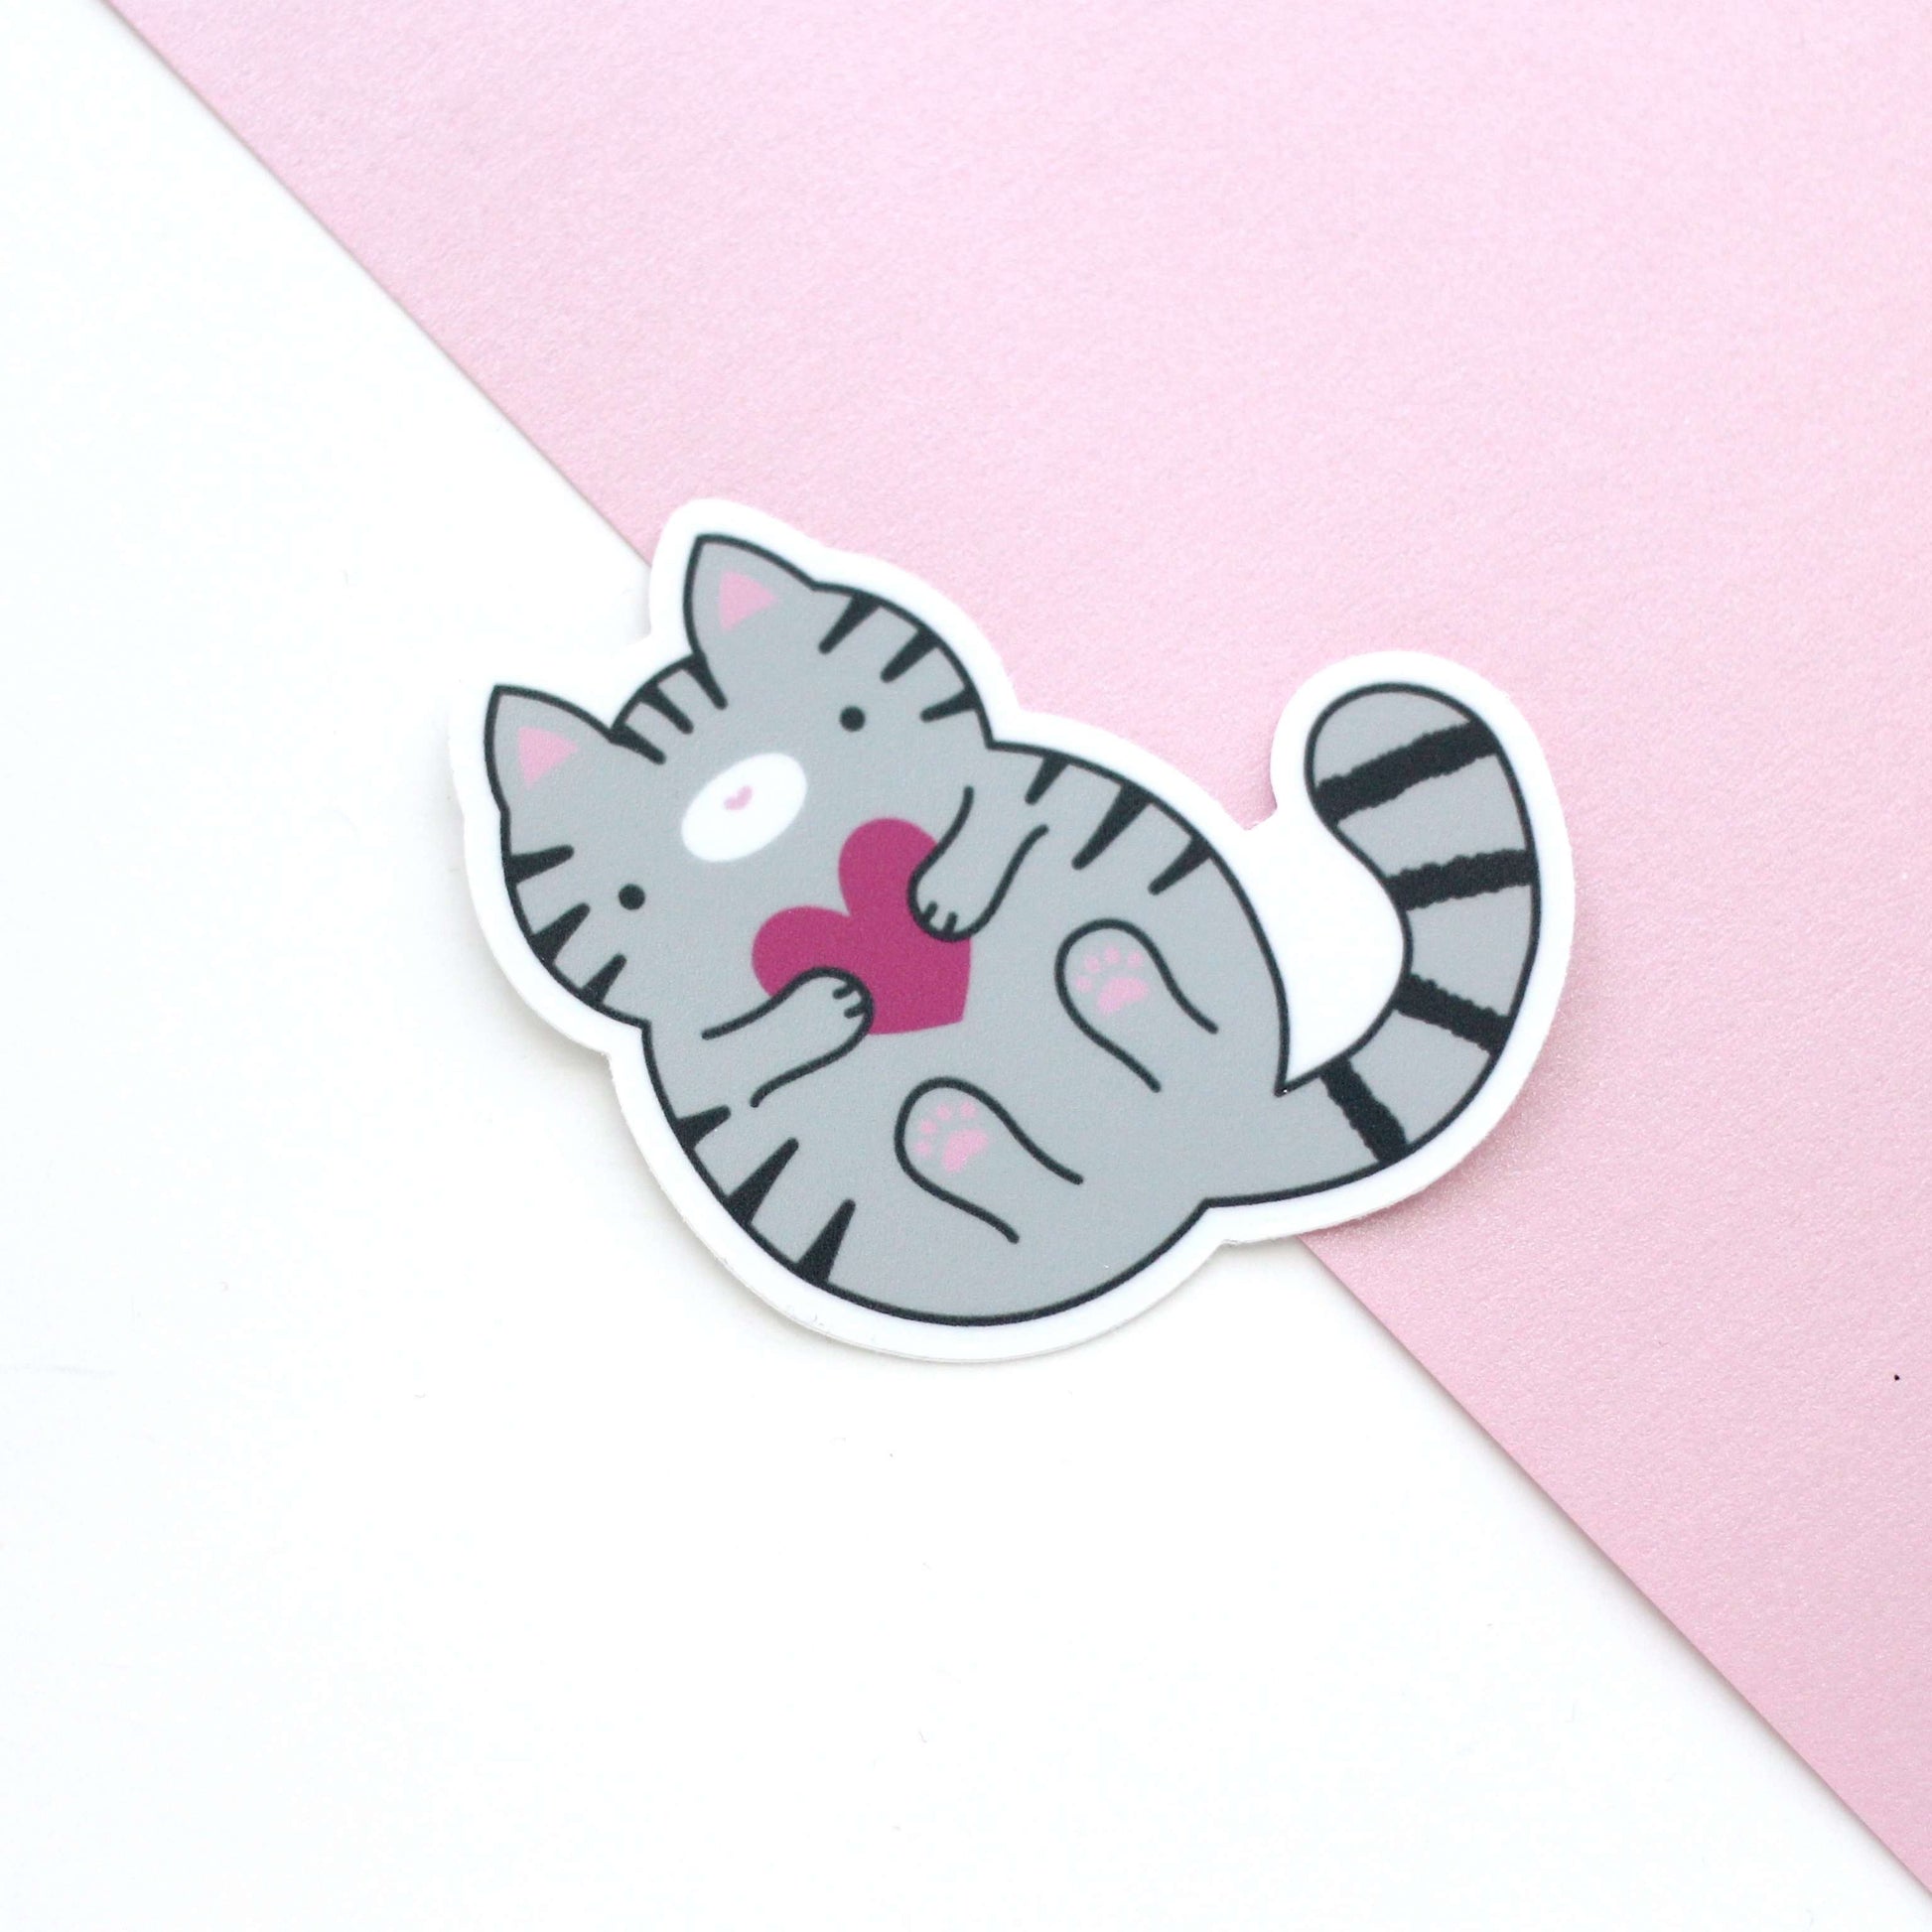 Grey Tabby Cat Vinyl Sticker - Cute Cat Sticker - Cat Decal by Wild Whimsy Woolies